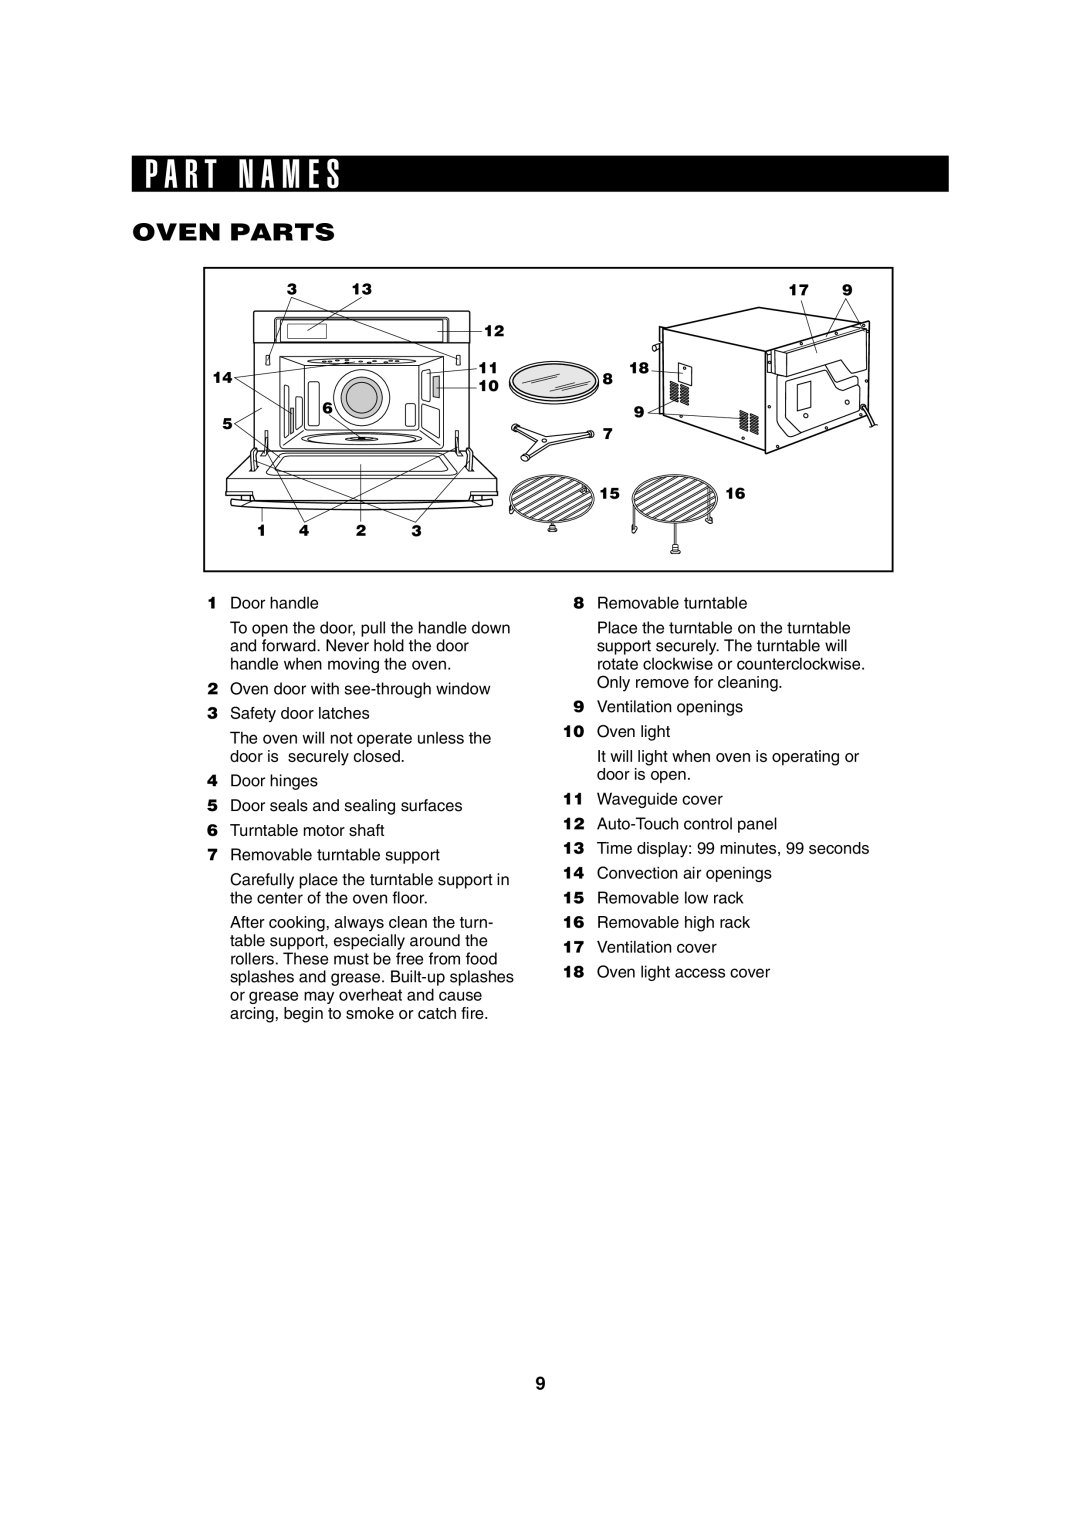 Sharp R-8000G operation manual P A R T N A M E S, Oven Parts 